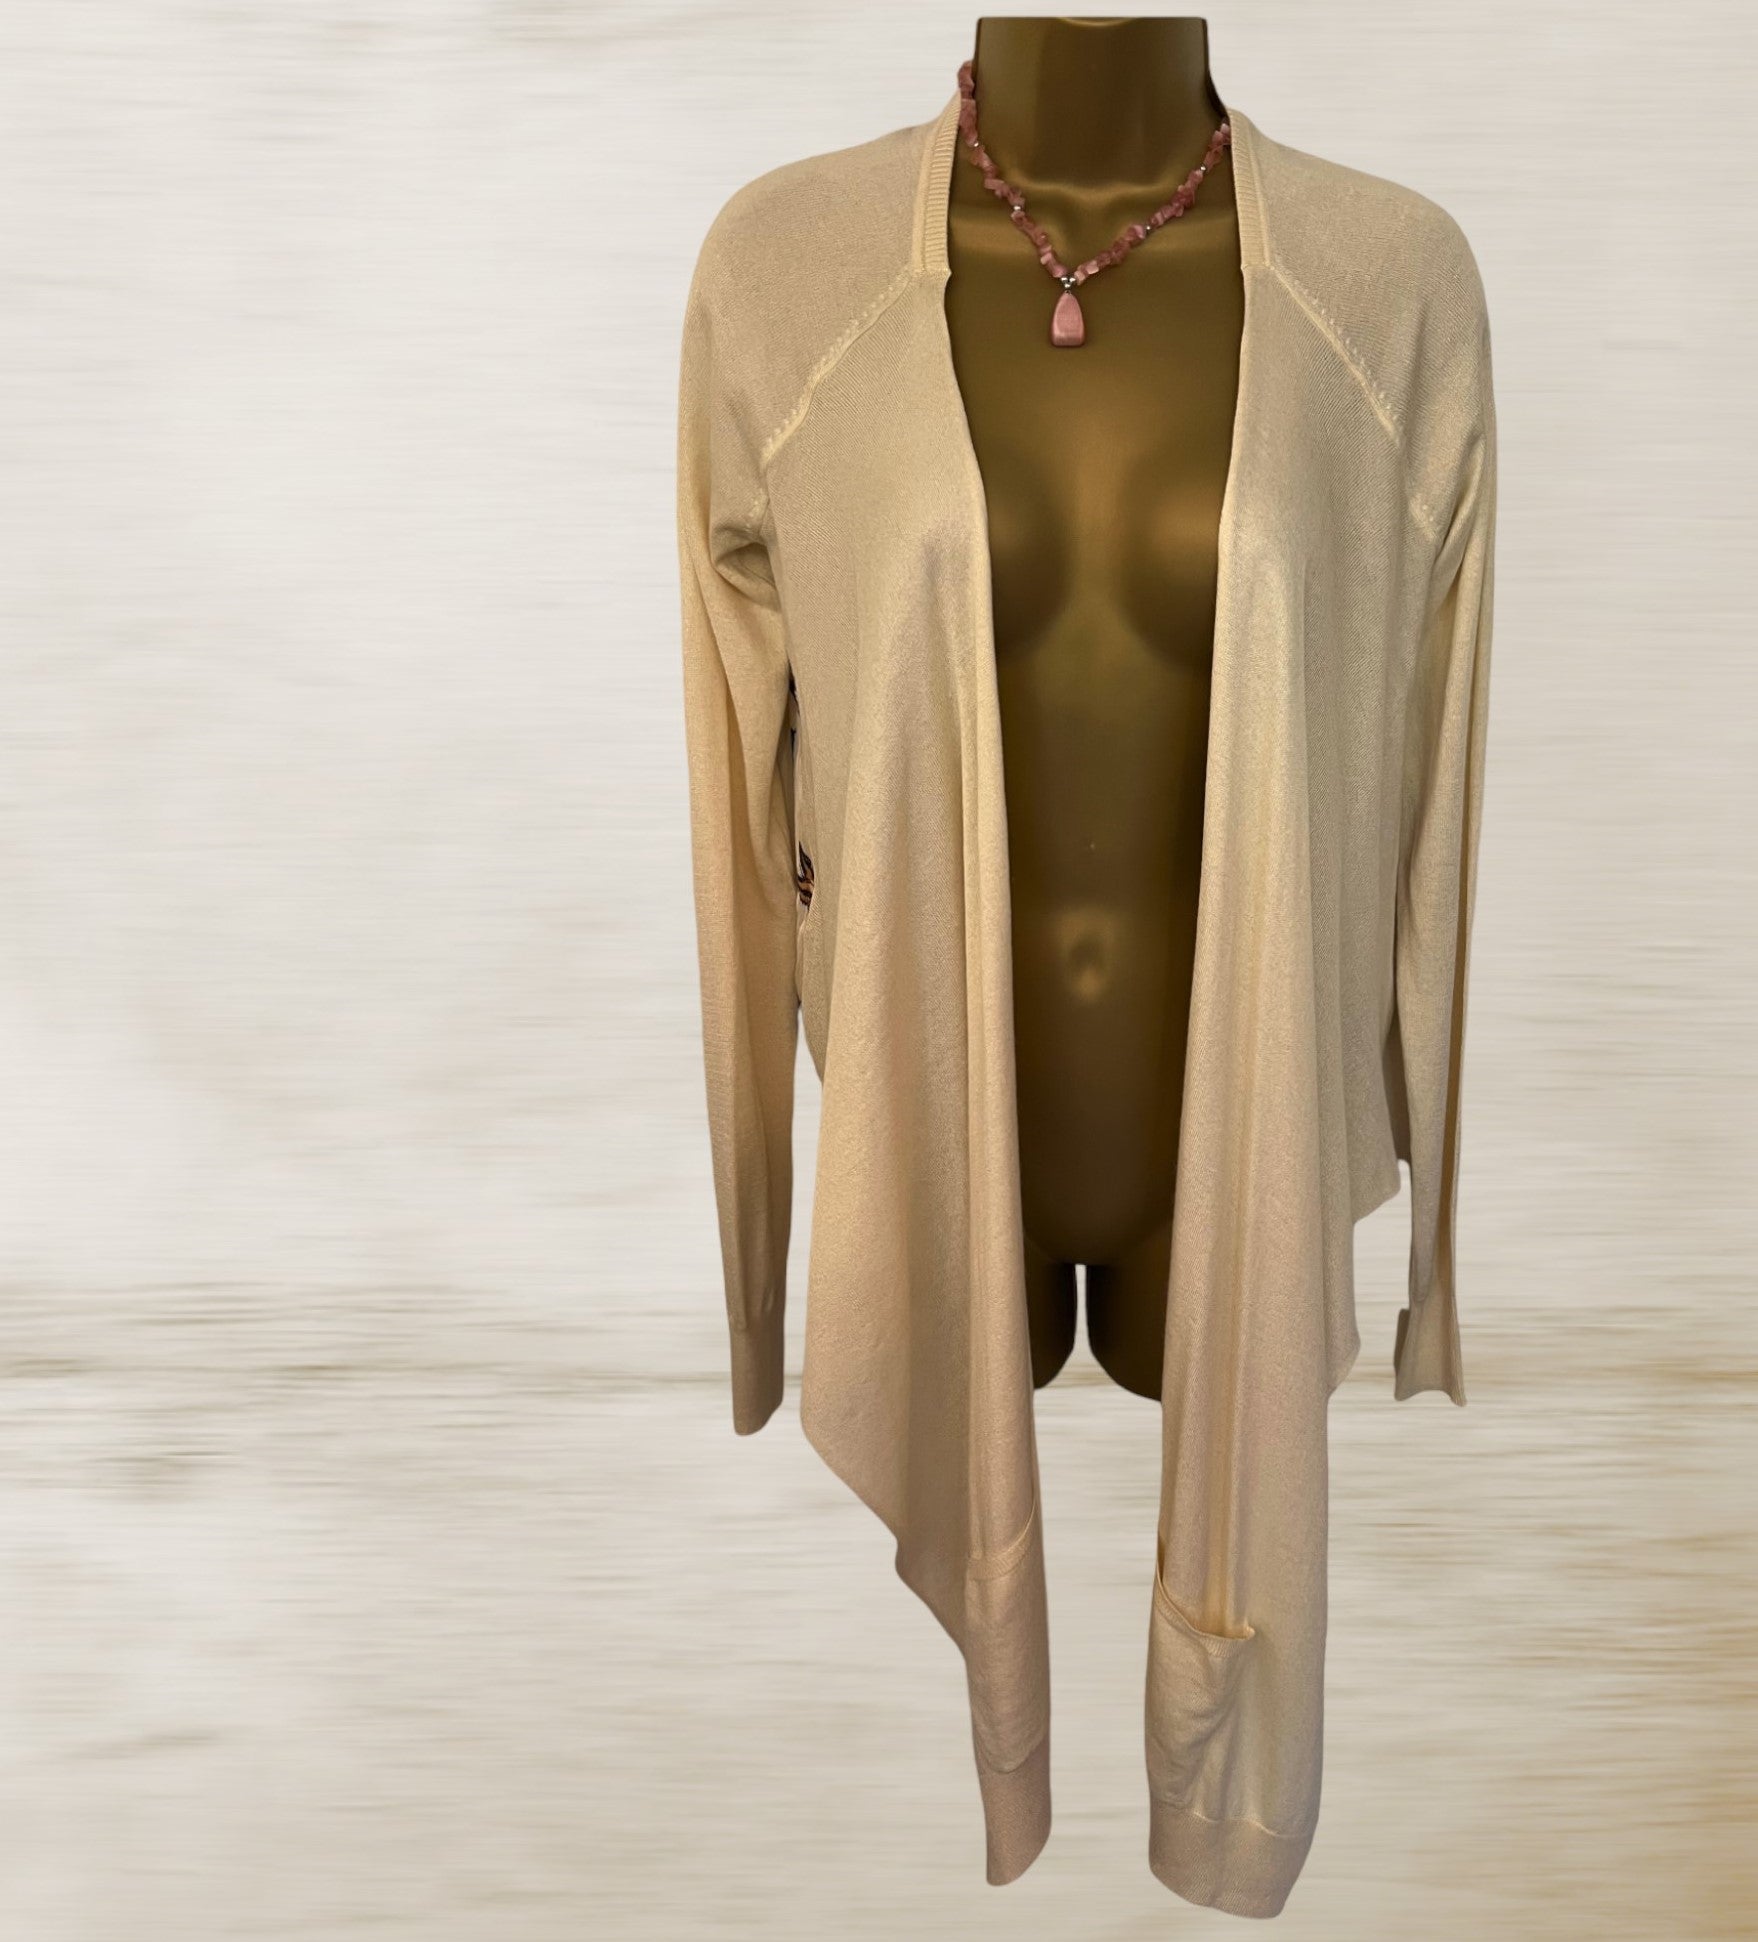 Ted Baker Cream & Multicoloured Silk & Angora Long Sleeve Waterfall Cardigan Size 1 UK 8 US 4 EU 36 Timeless Fashions